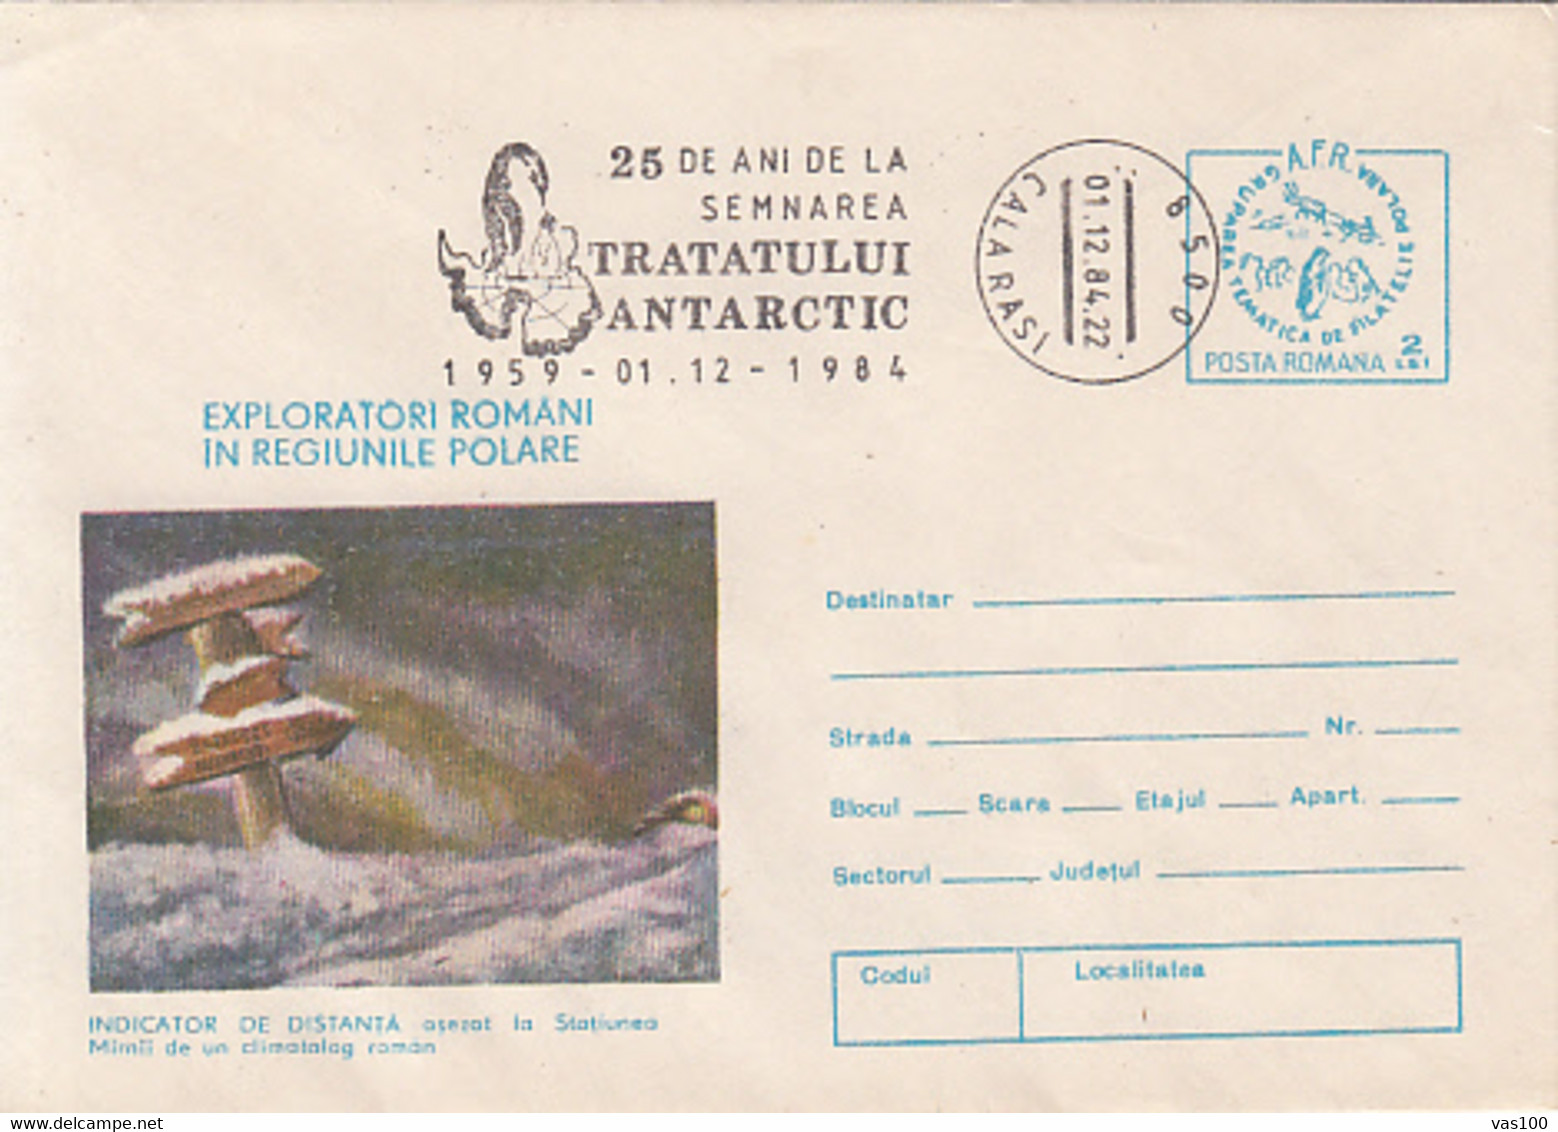 SOUTH POLE, ANTARCTIC TREATY SPECIAL POSTMARK, ANTARCTIC LANDSCAPE, COVER STATIONERY, ENTIER POSTAL, 1984, ROMANIA - Trattato Antartico